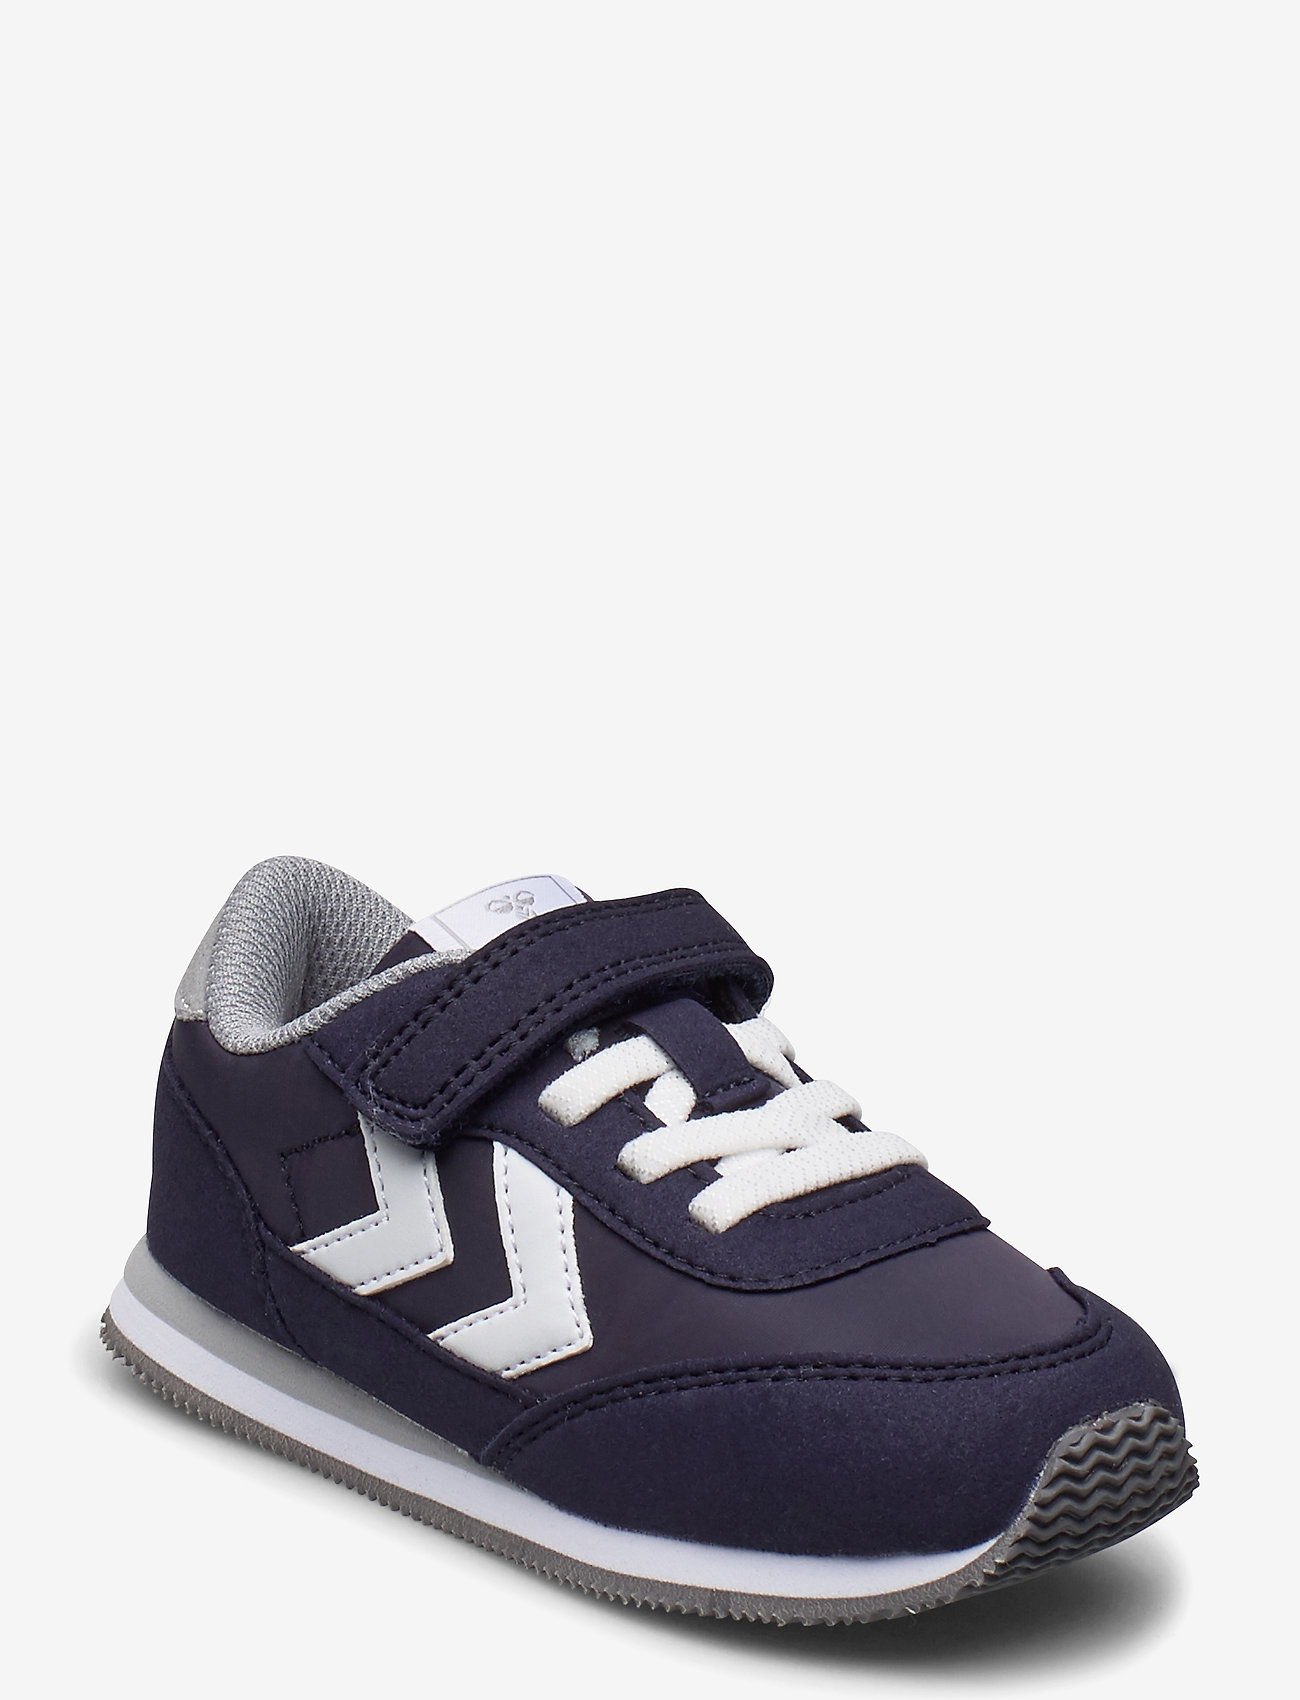 Hummel - REFLEX INFANT - sport shoes - black iris - 0